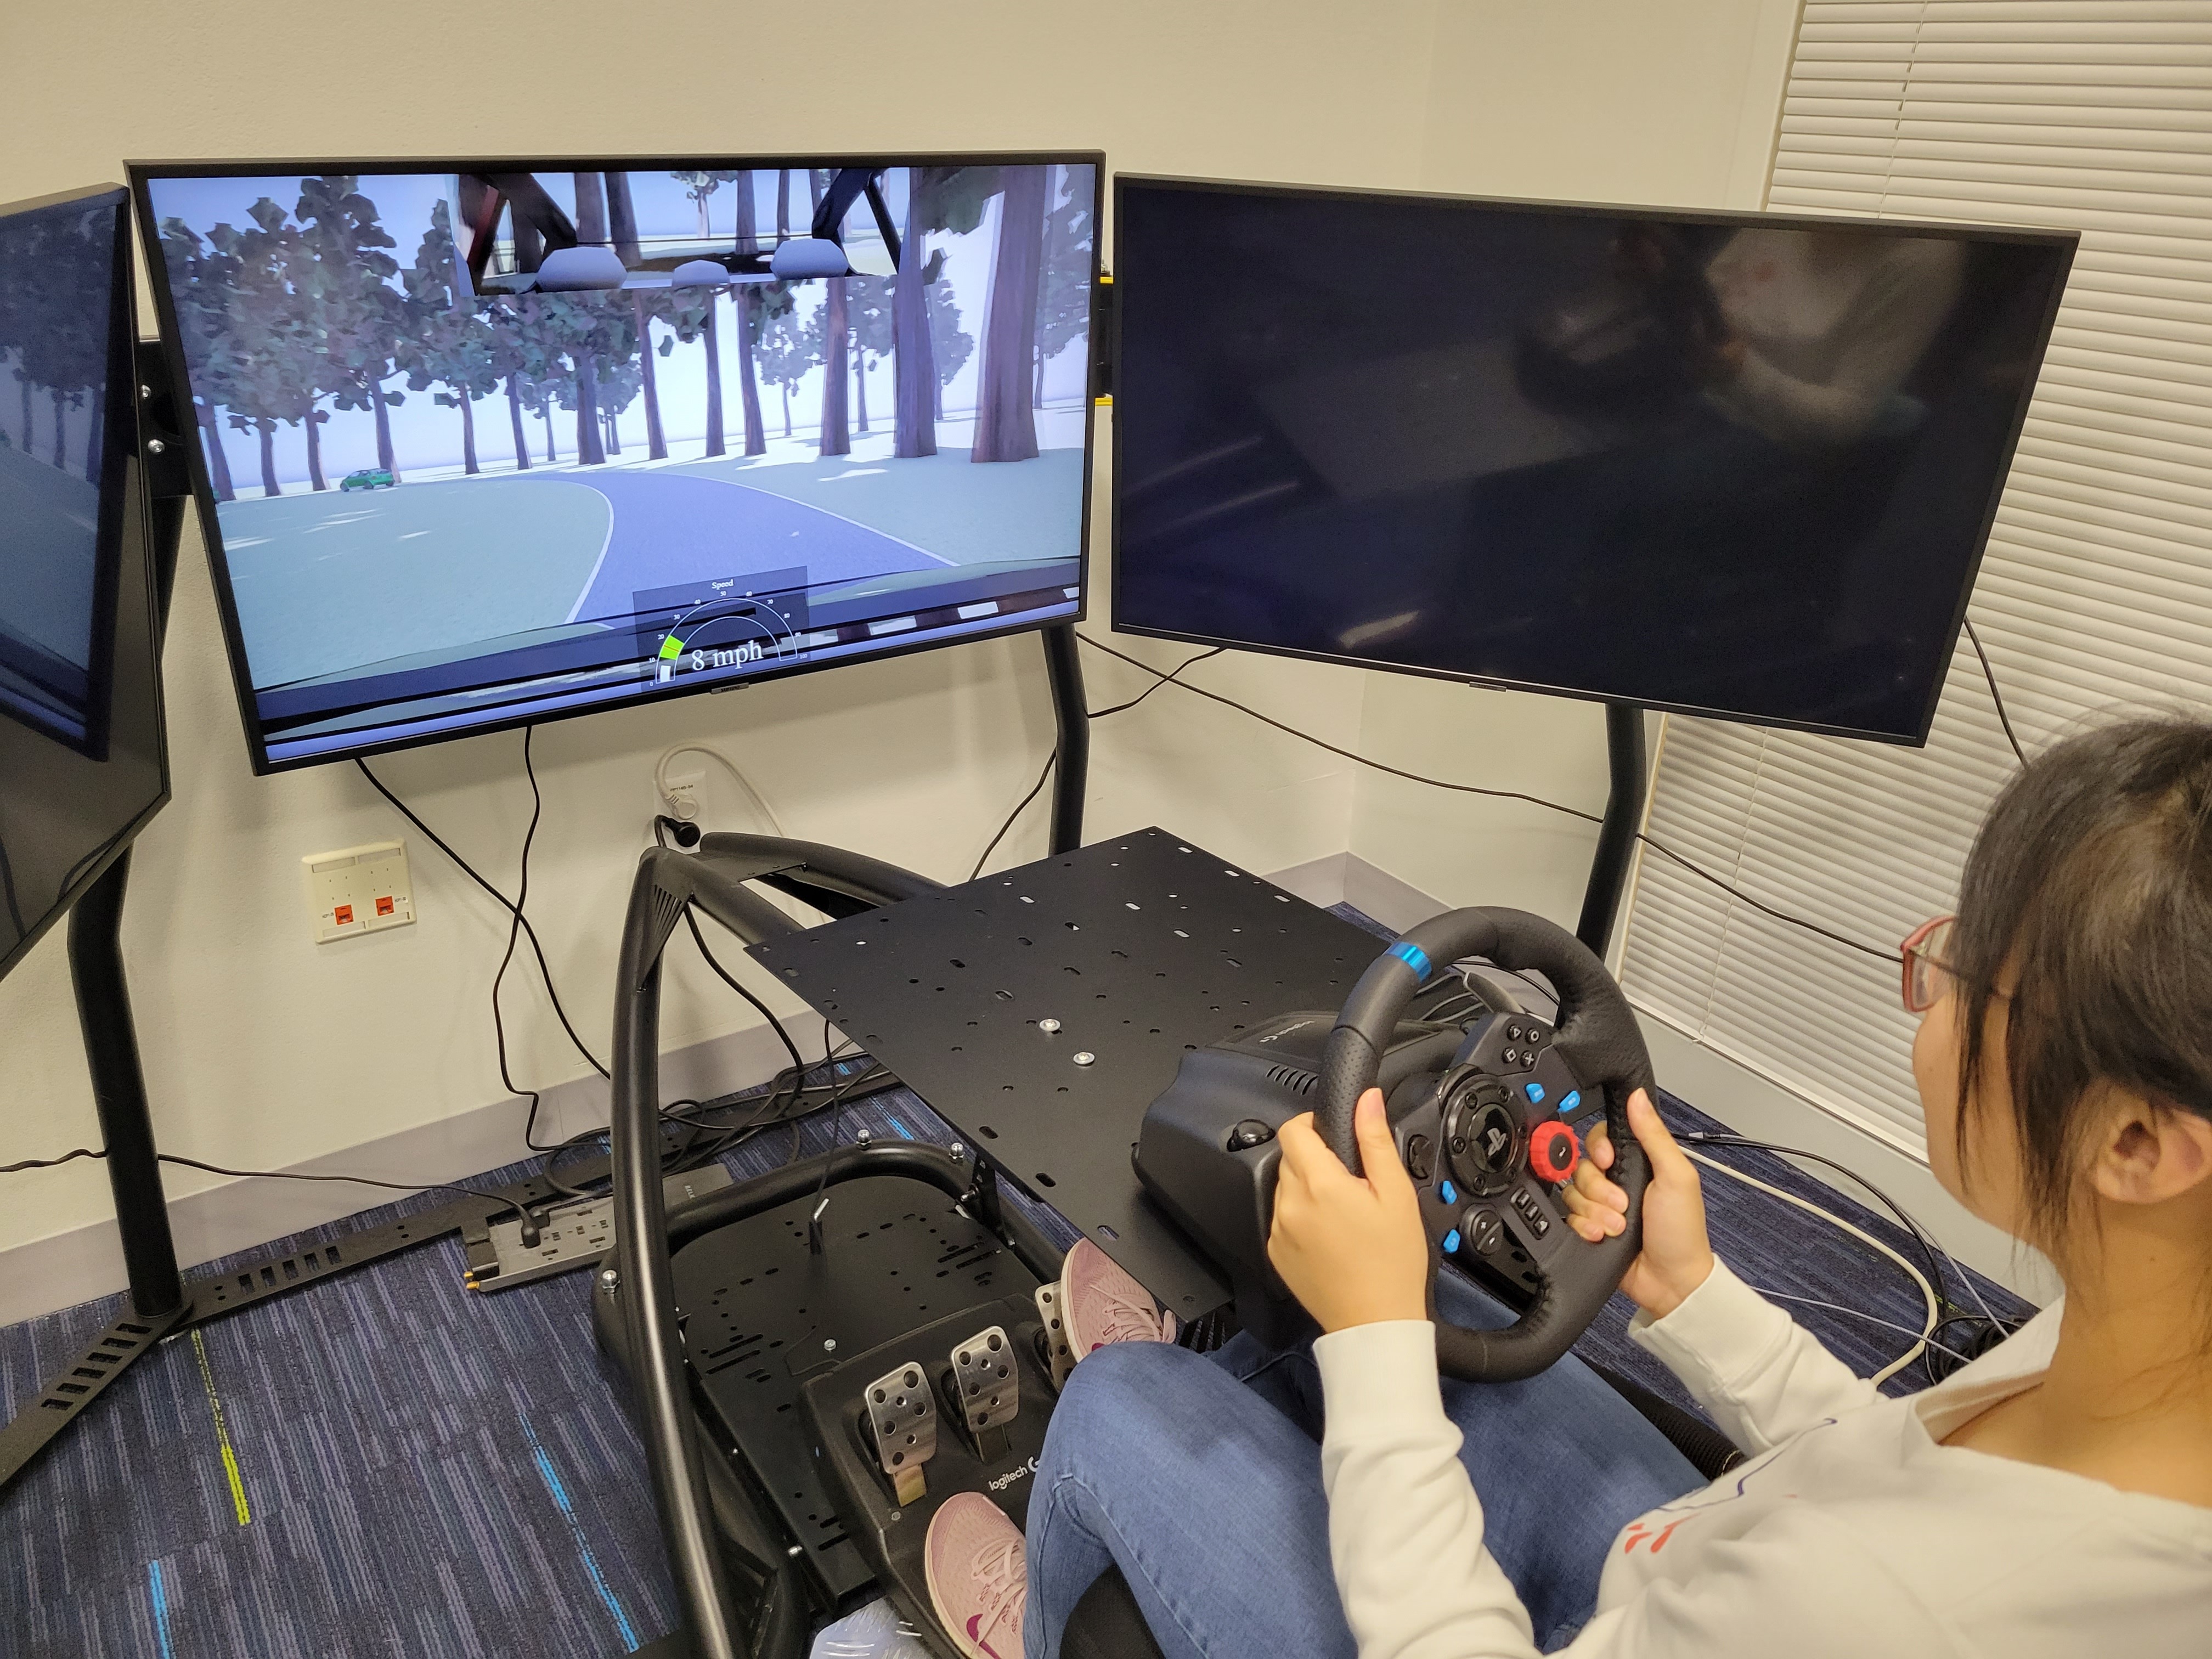 Driving simulator used to perform user studies